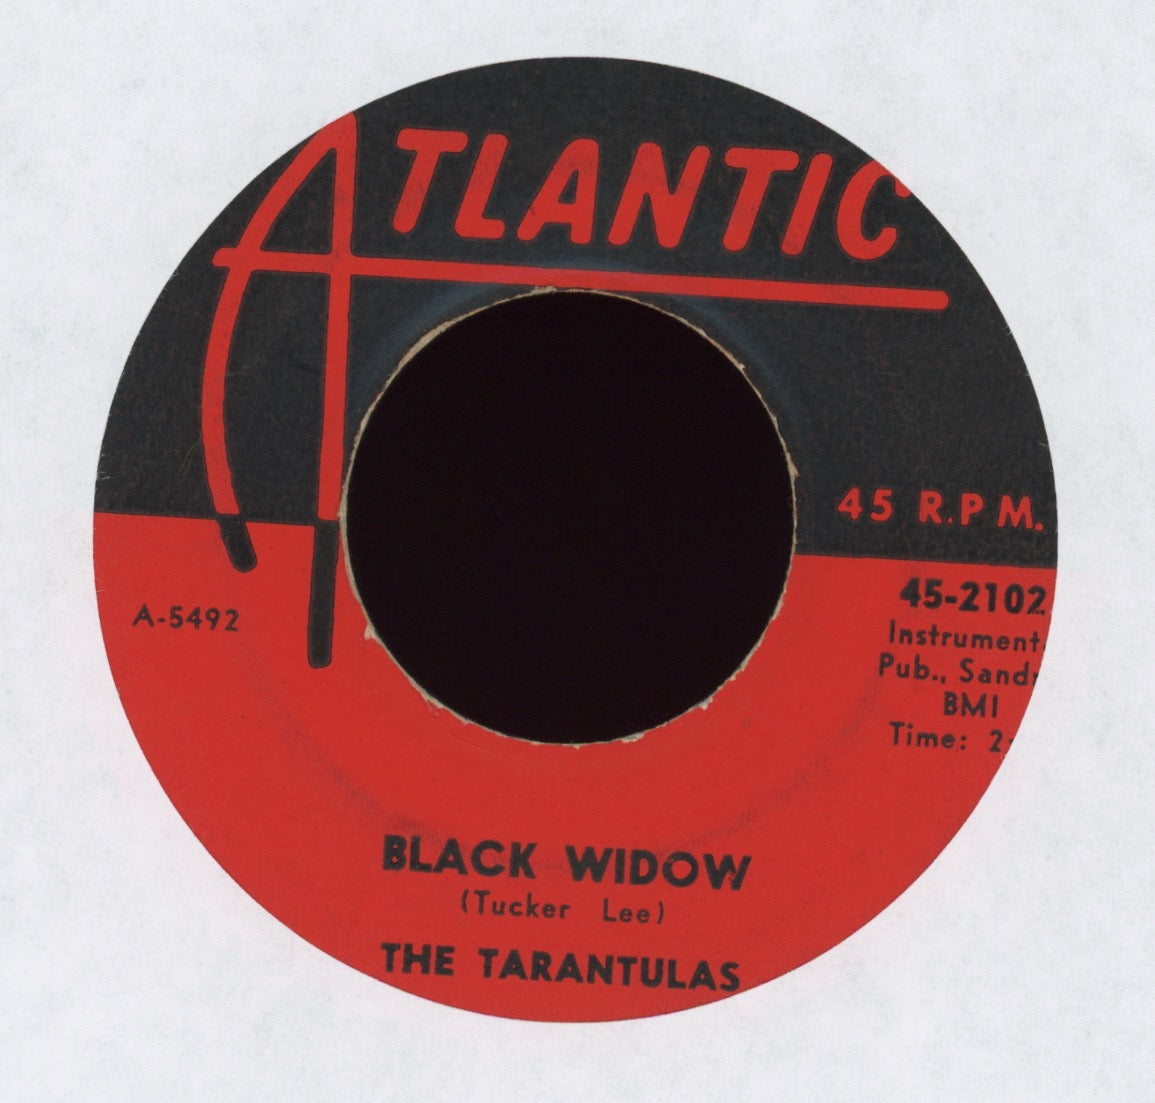 The Tarantulas - Black Widow on Atlantic